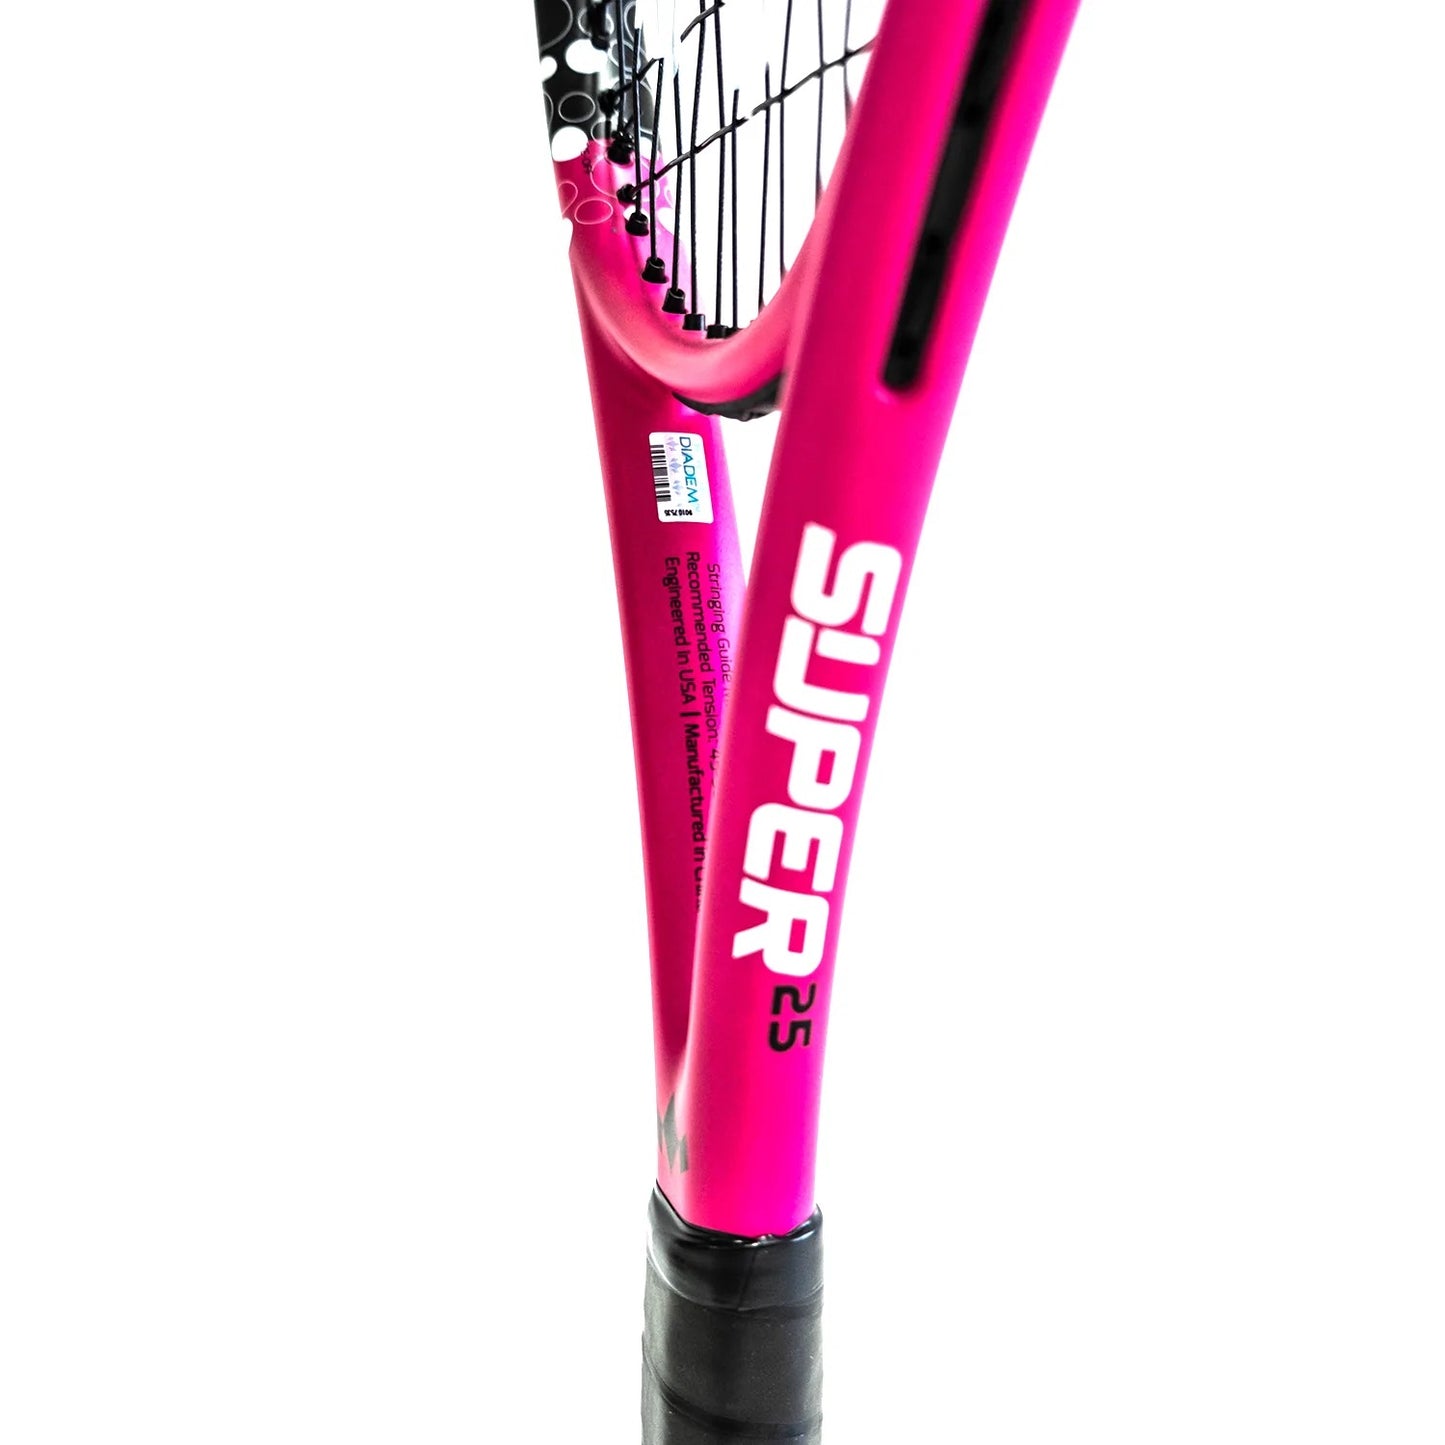 Diadem Super 25" Pink Junior Racquet